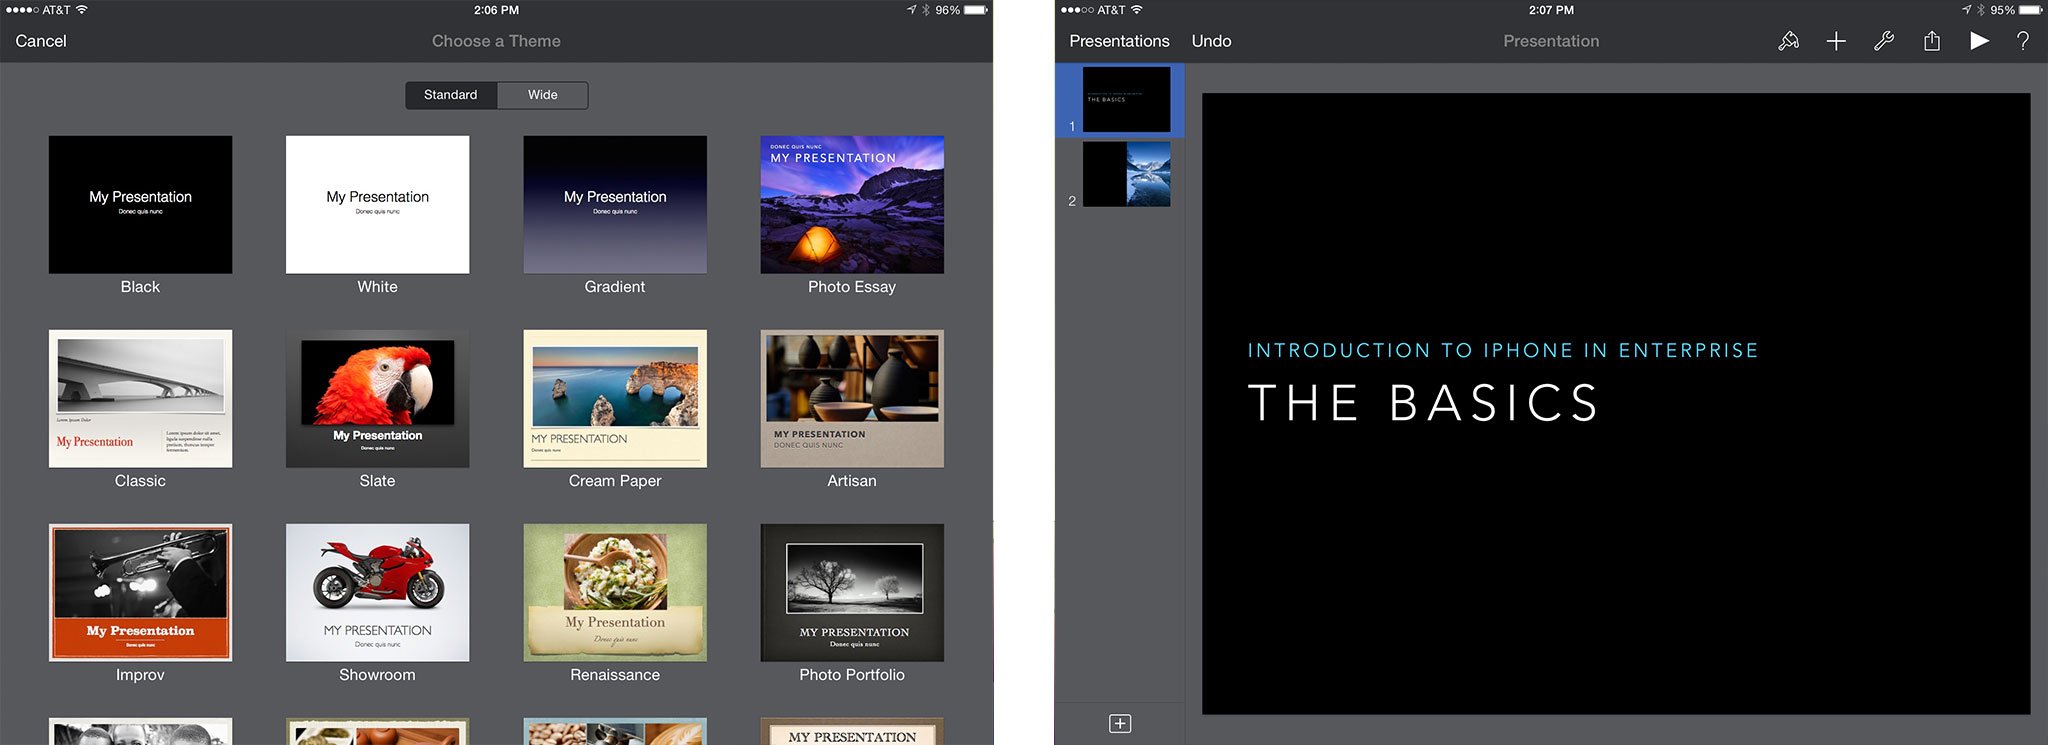 Best presentation apps for iPad: Keynote